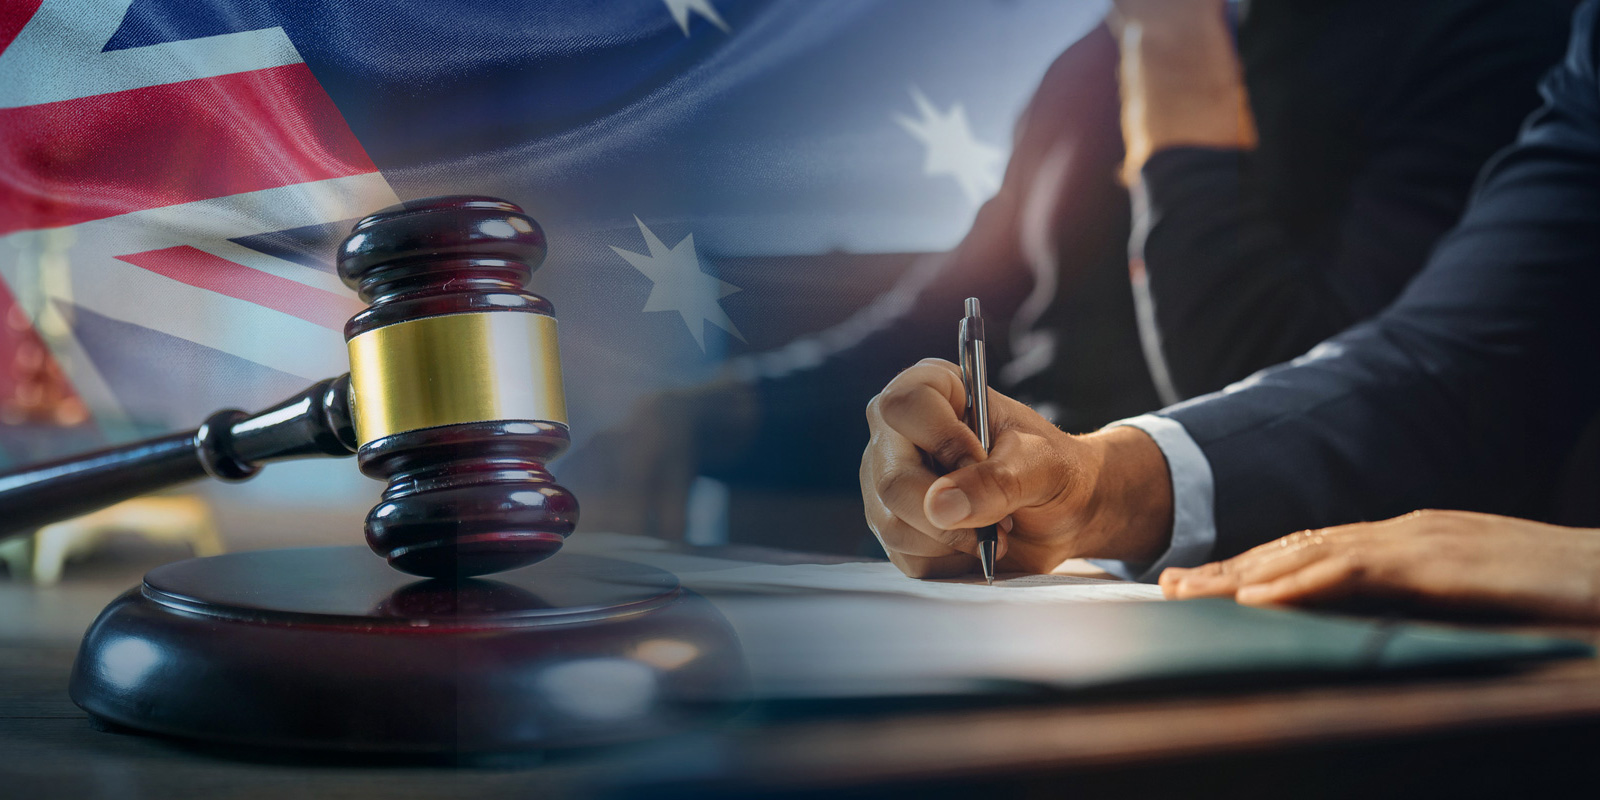 louisiana civil lawsuit witness statement uk australia